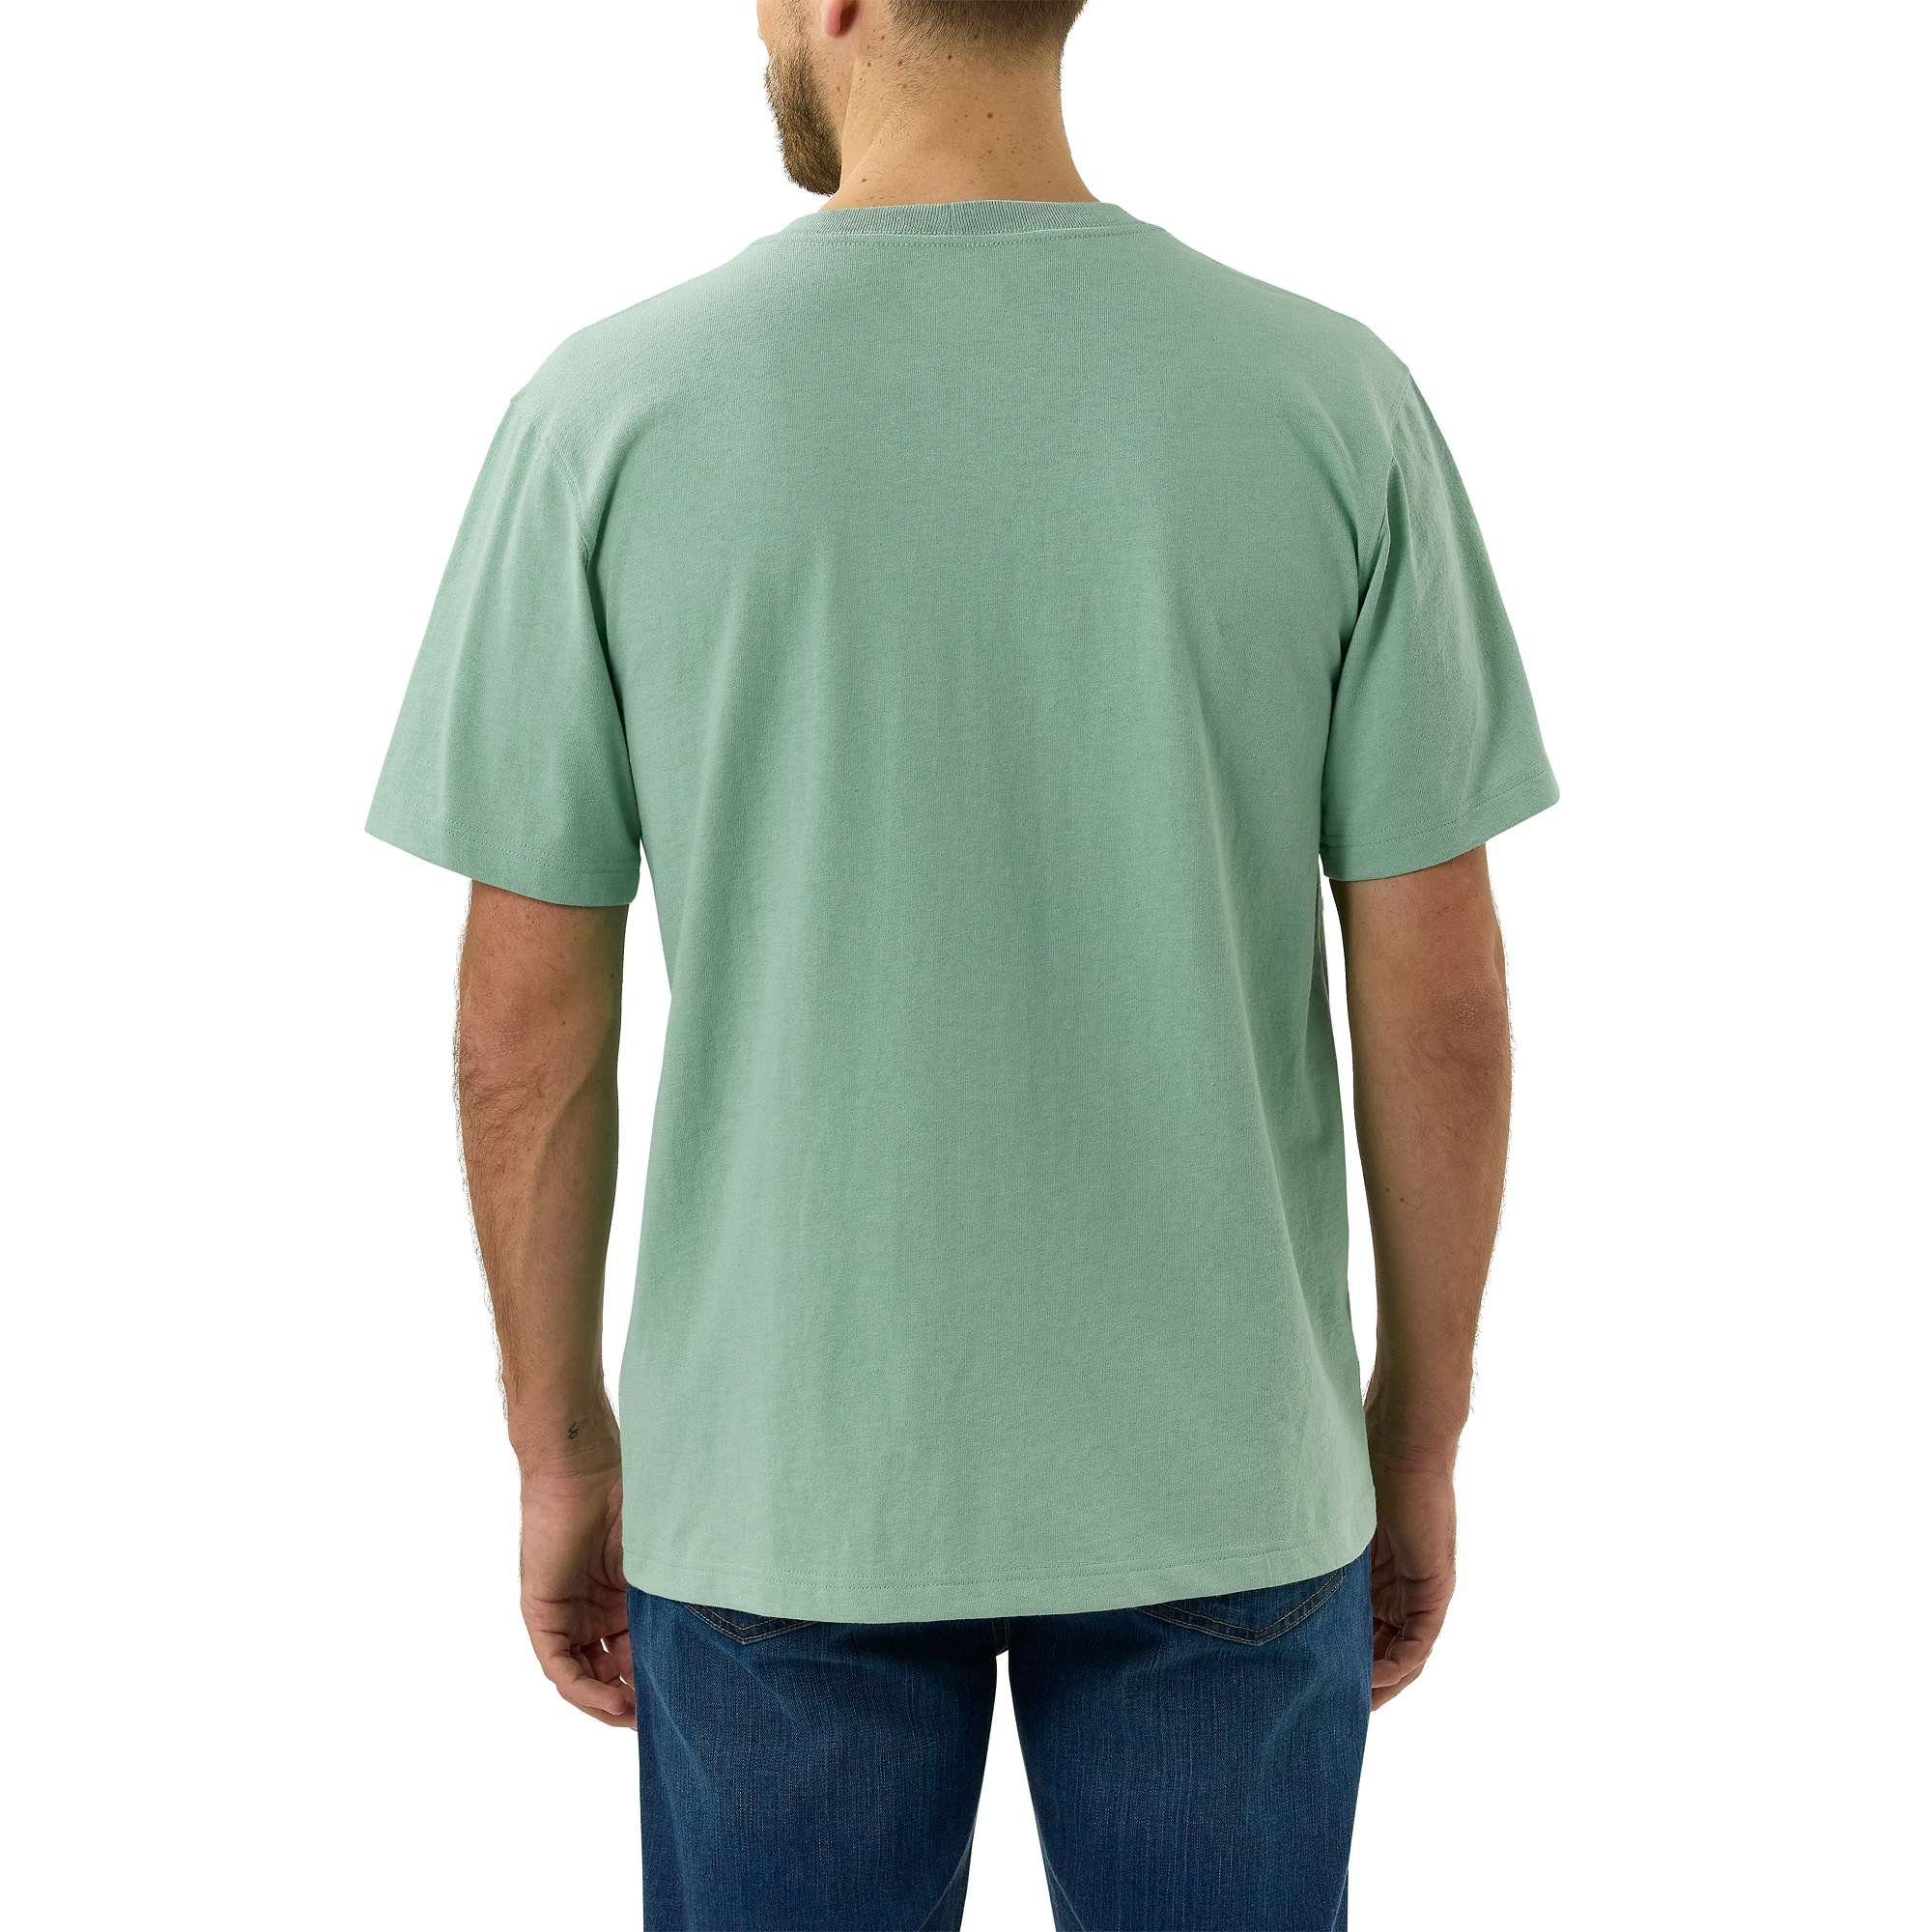 K87 T-Shirt SeaGreen Carhartt Pocket Relaxed Fit